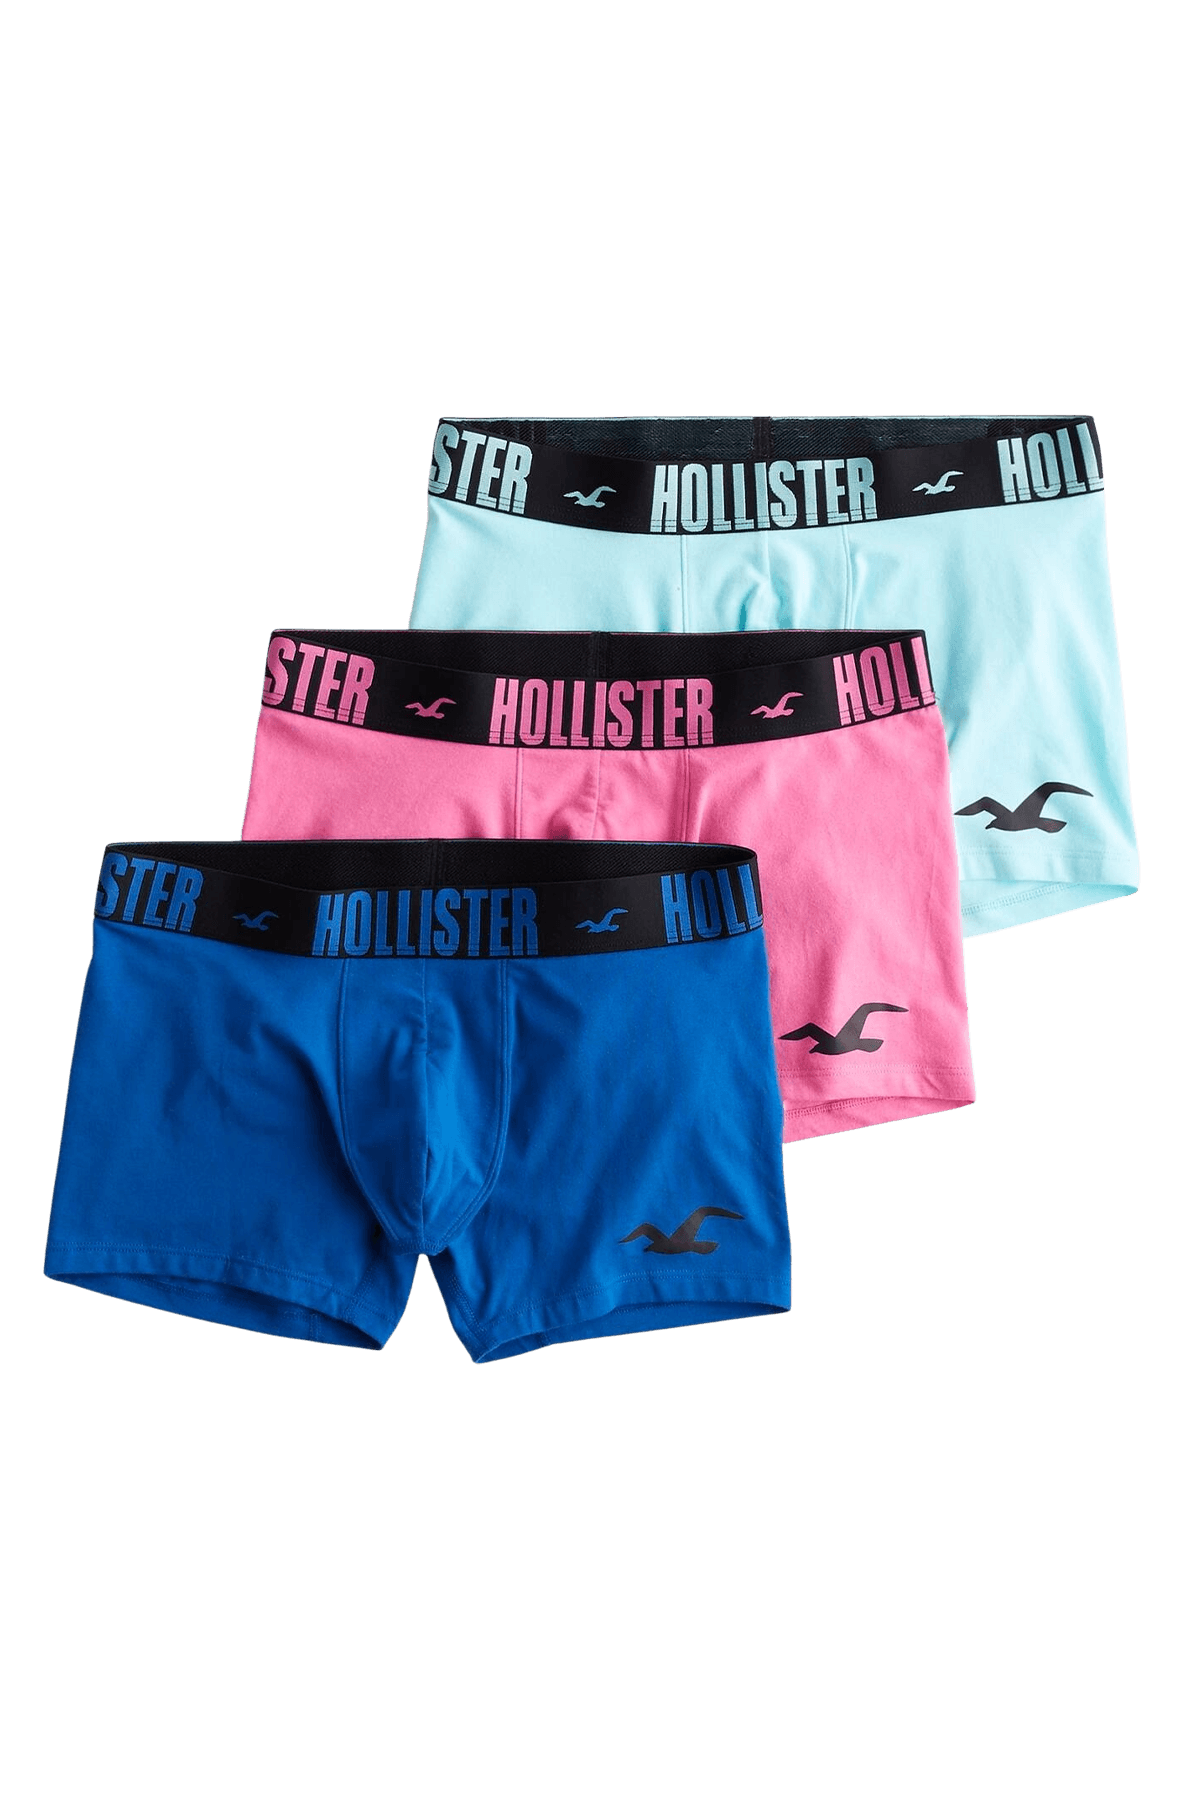 Hollister Boxer Briefs 3-Pack Pink-Blue-Turq | CheapUndies